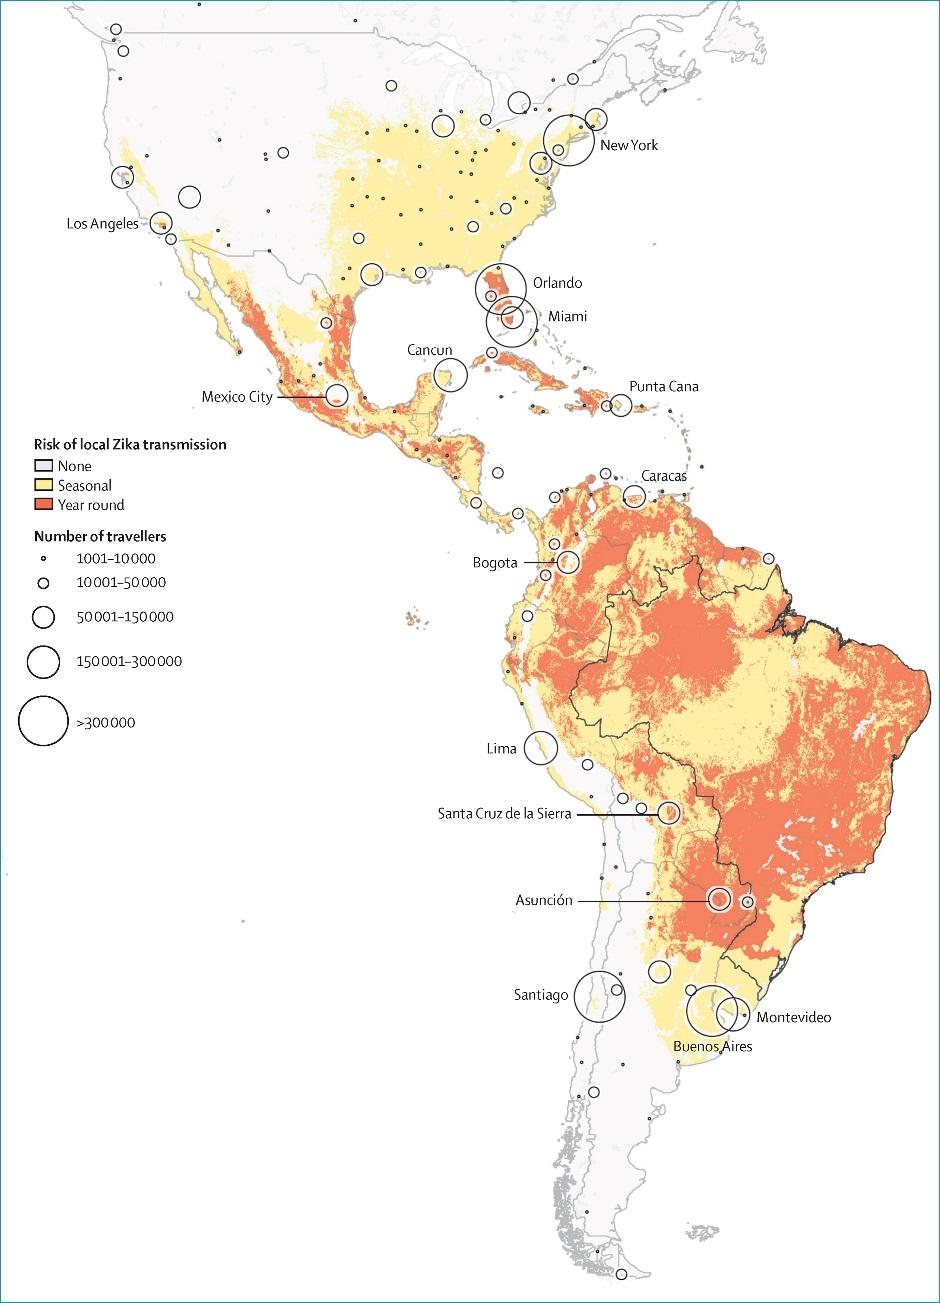 Anticipating the international spread of Zika